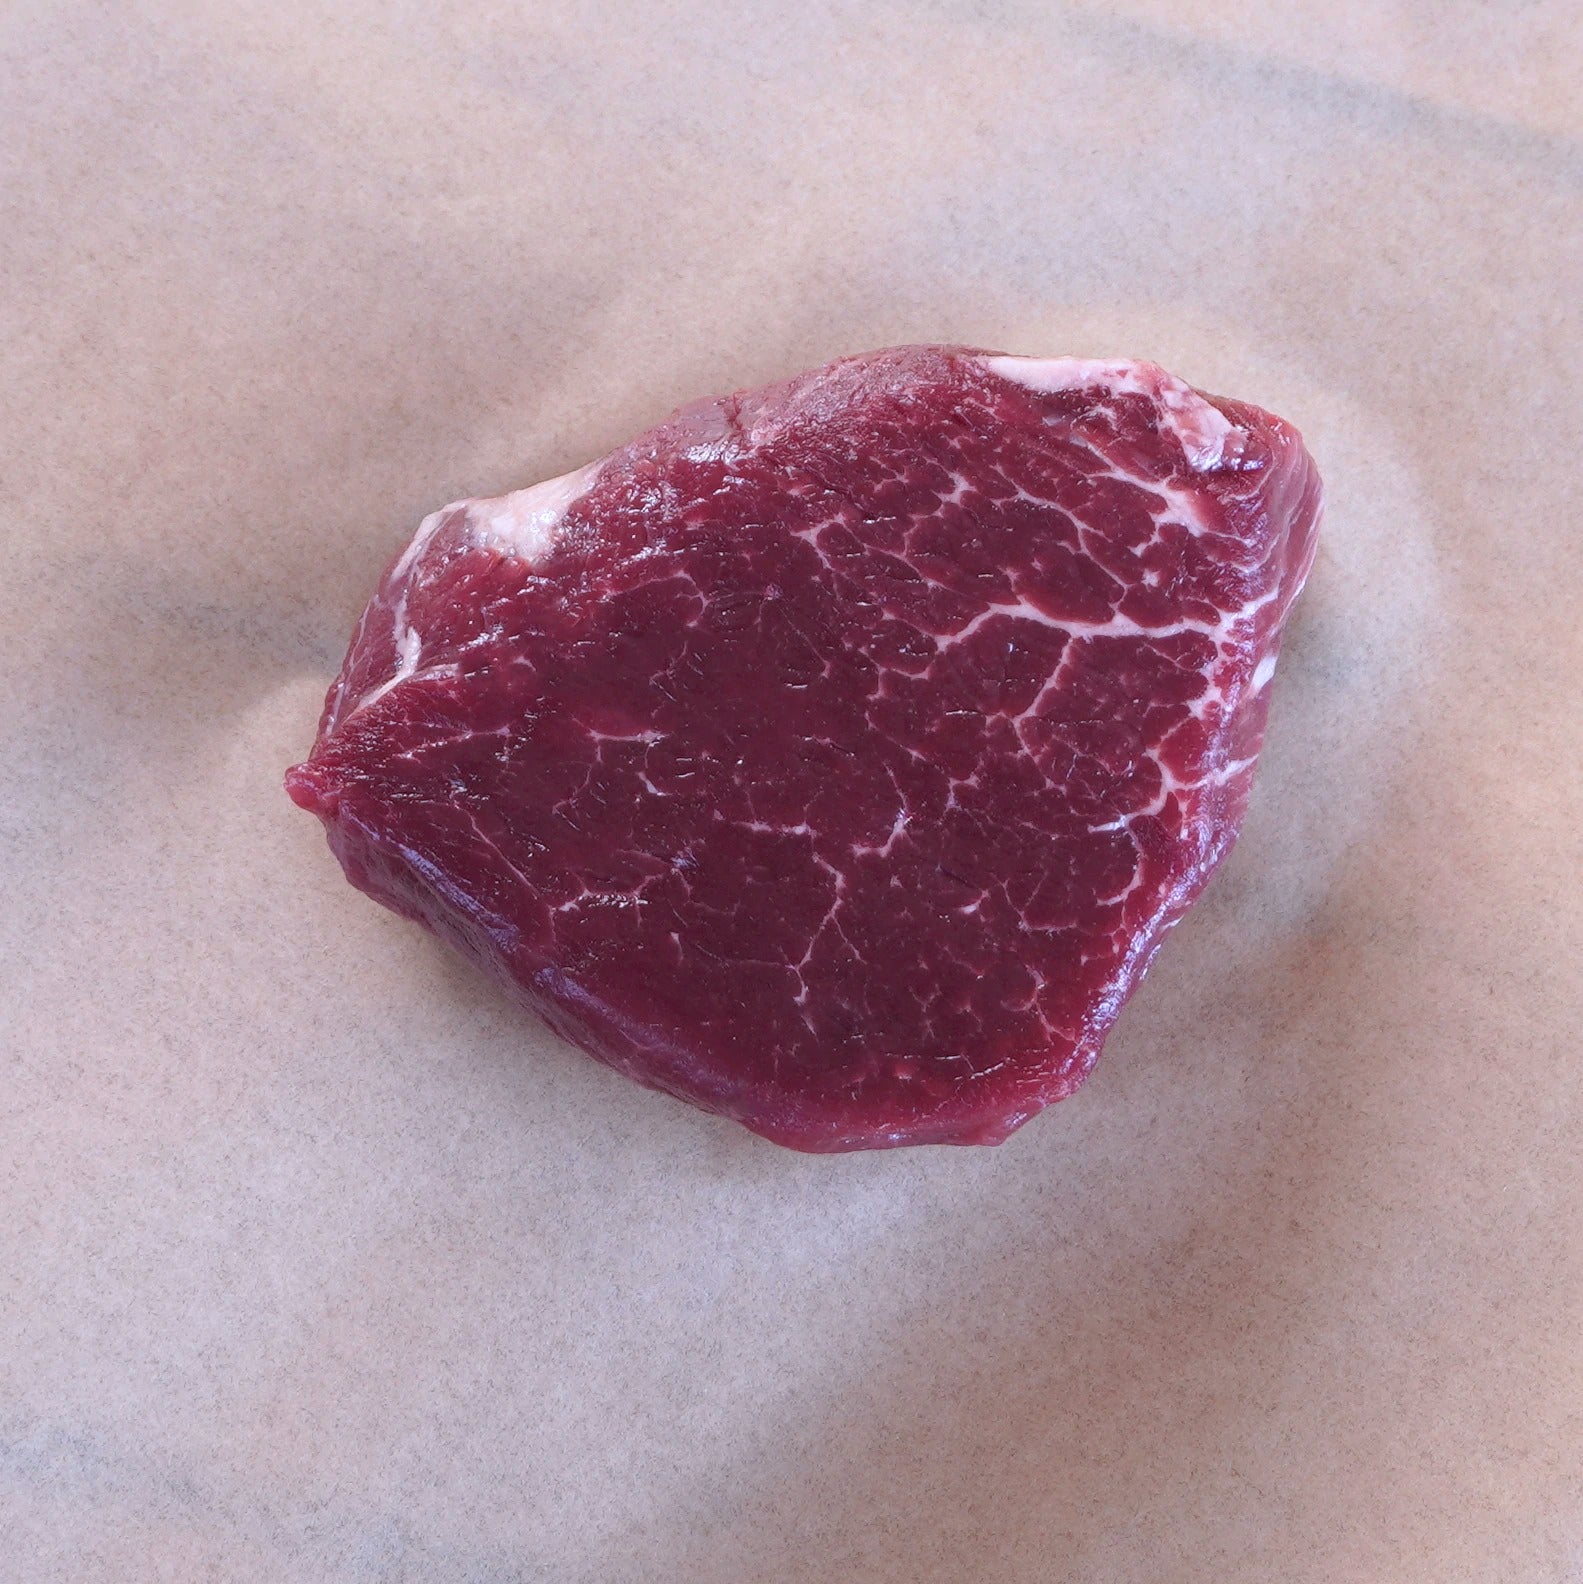 Grass-Fed Beef Filet Steak from New Zealand 200g 10-Pack (2kg) - Horizon Farms